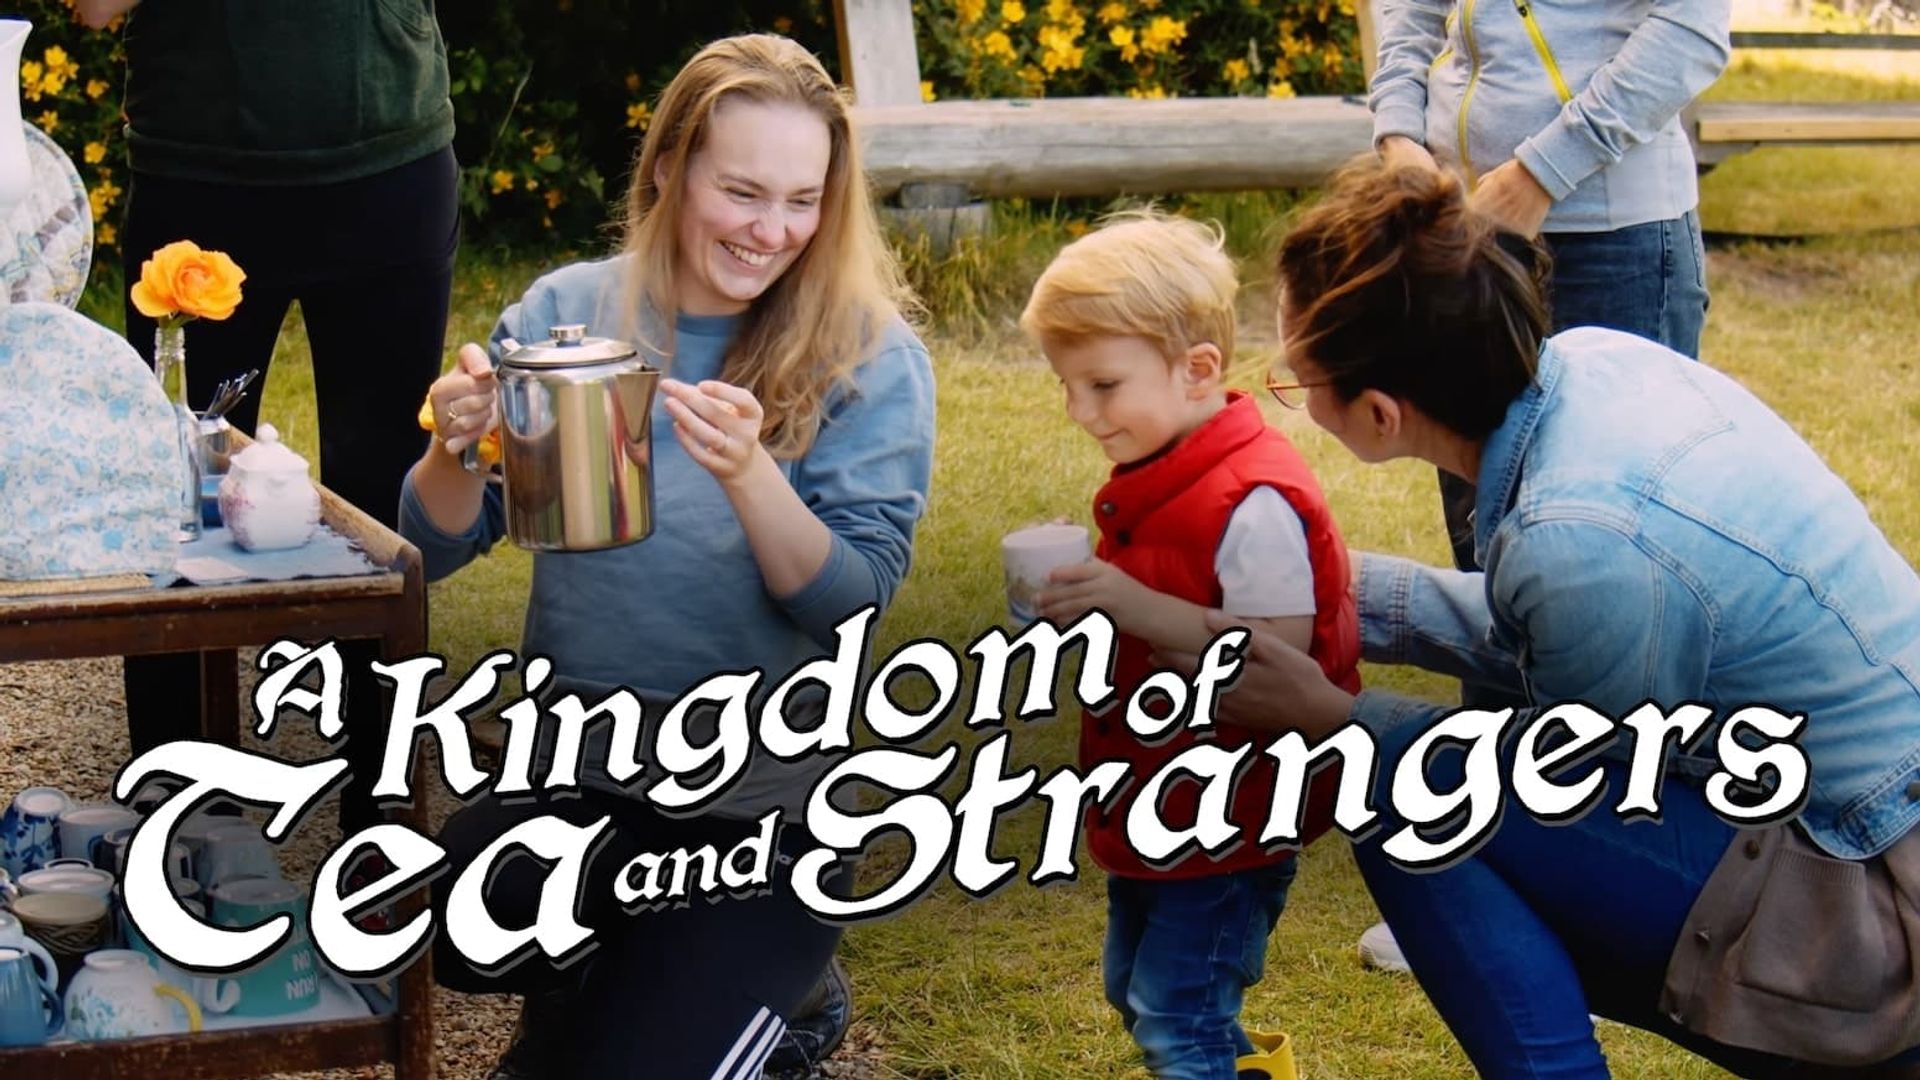 A Kingdom of Tea & Strangers background